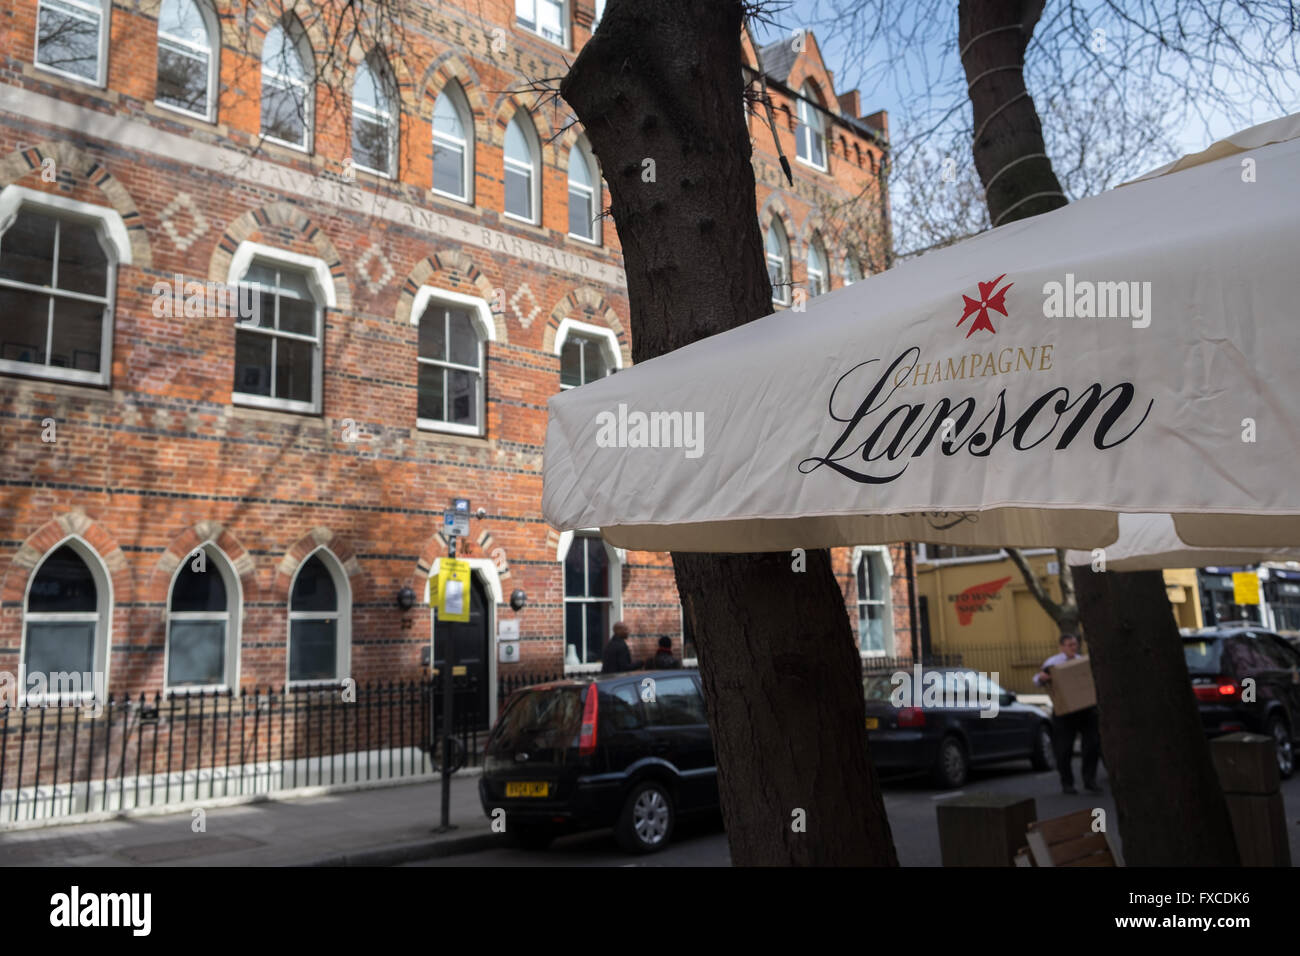 Lanson champagne umbrella on a central london street Stock Photo